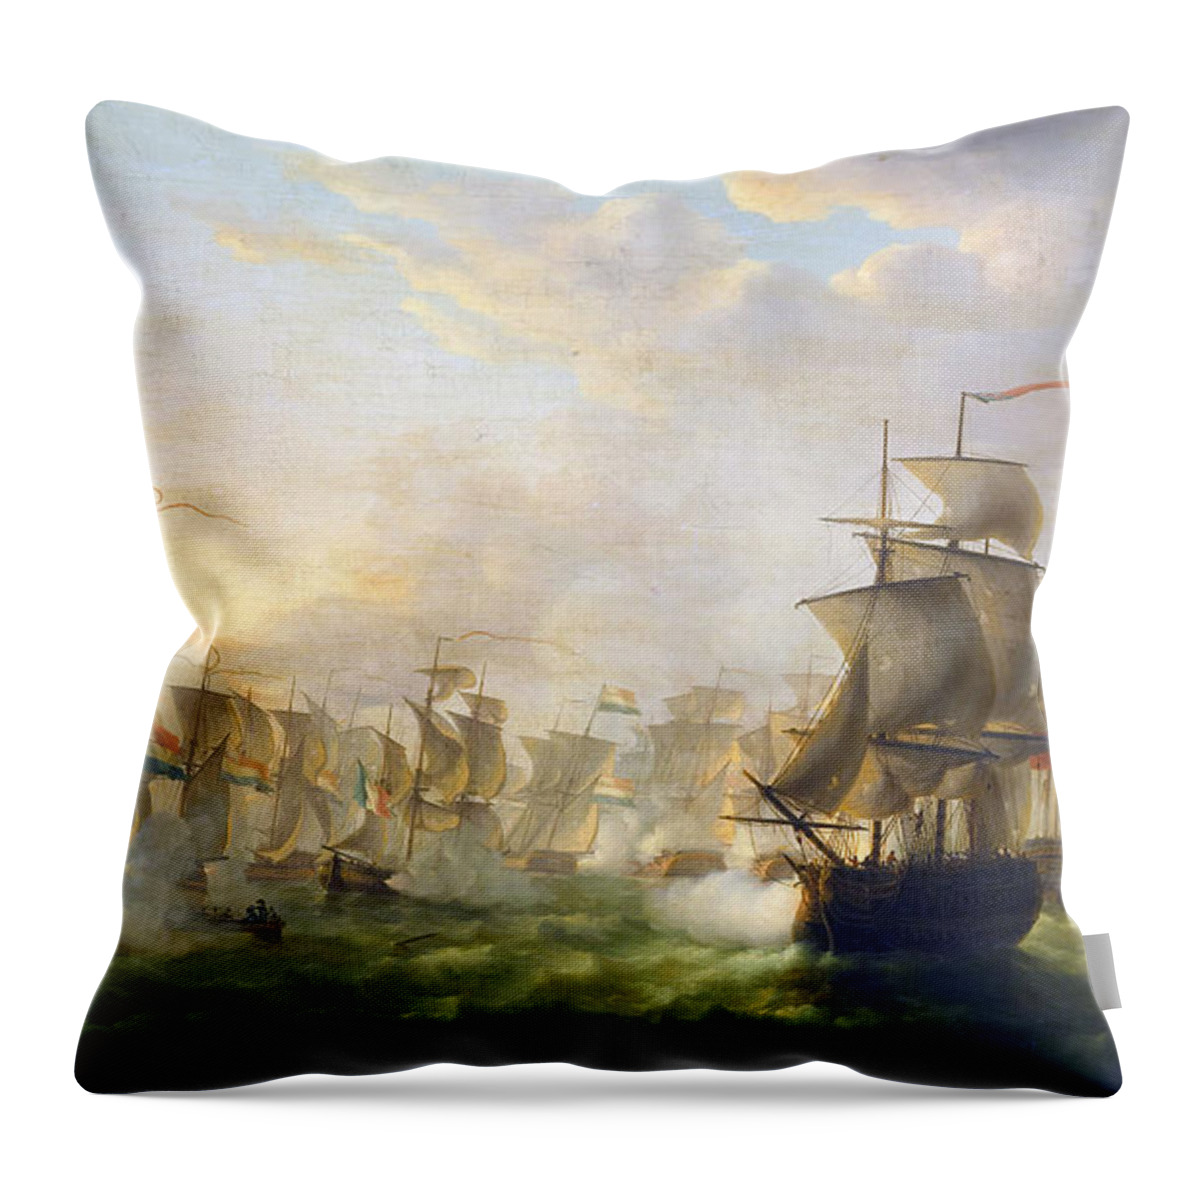 Dutch And English Fleets Throw Pillow featuring the painting Dutch and English Fleets by Martinus Schouman